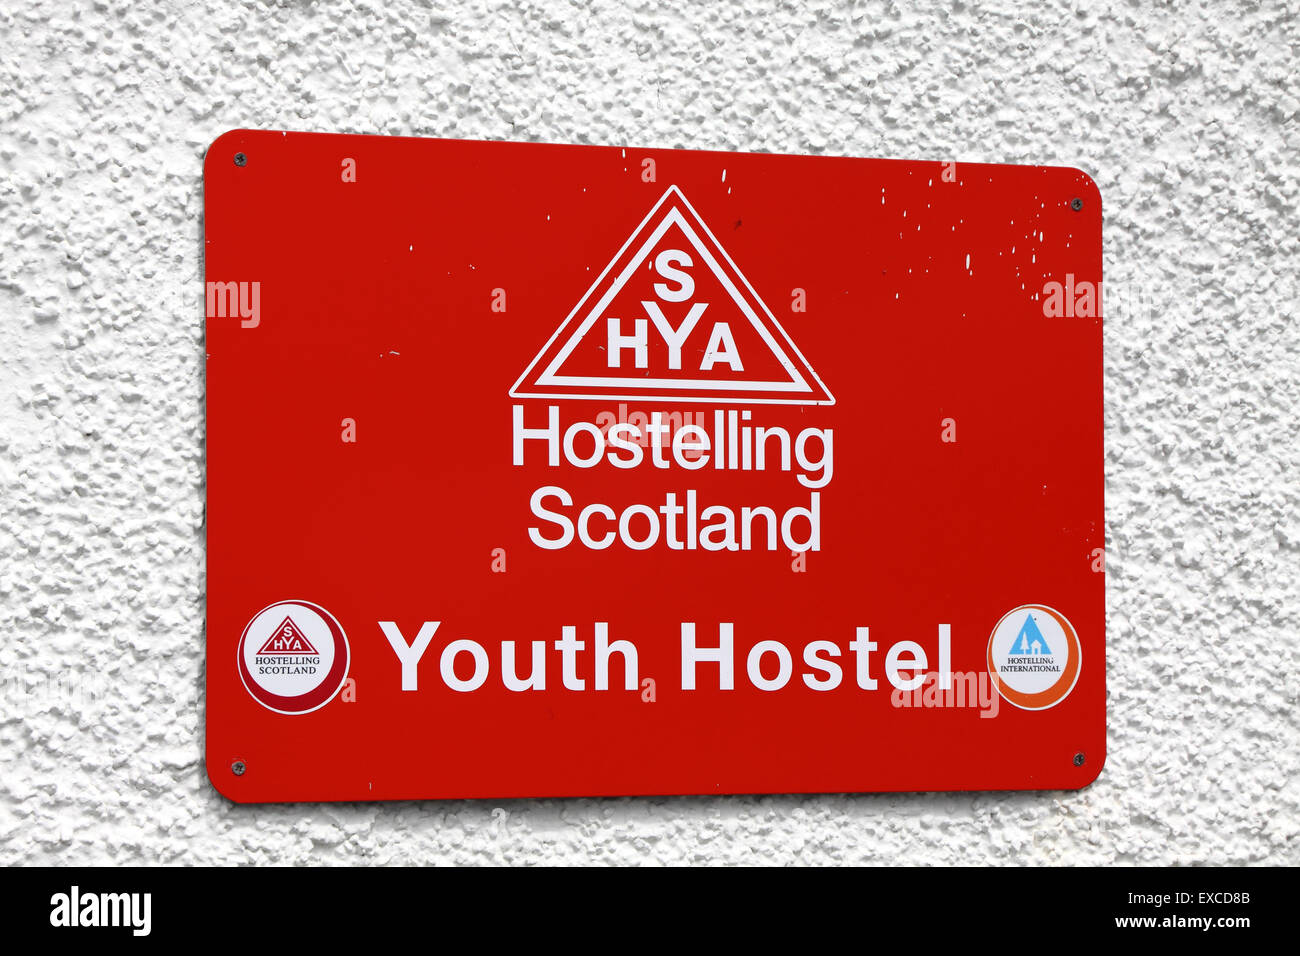 SHYA Youth Hostel sign in Ullapool, Scotland Stock Photo